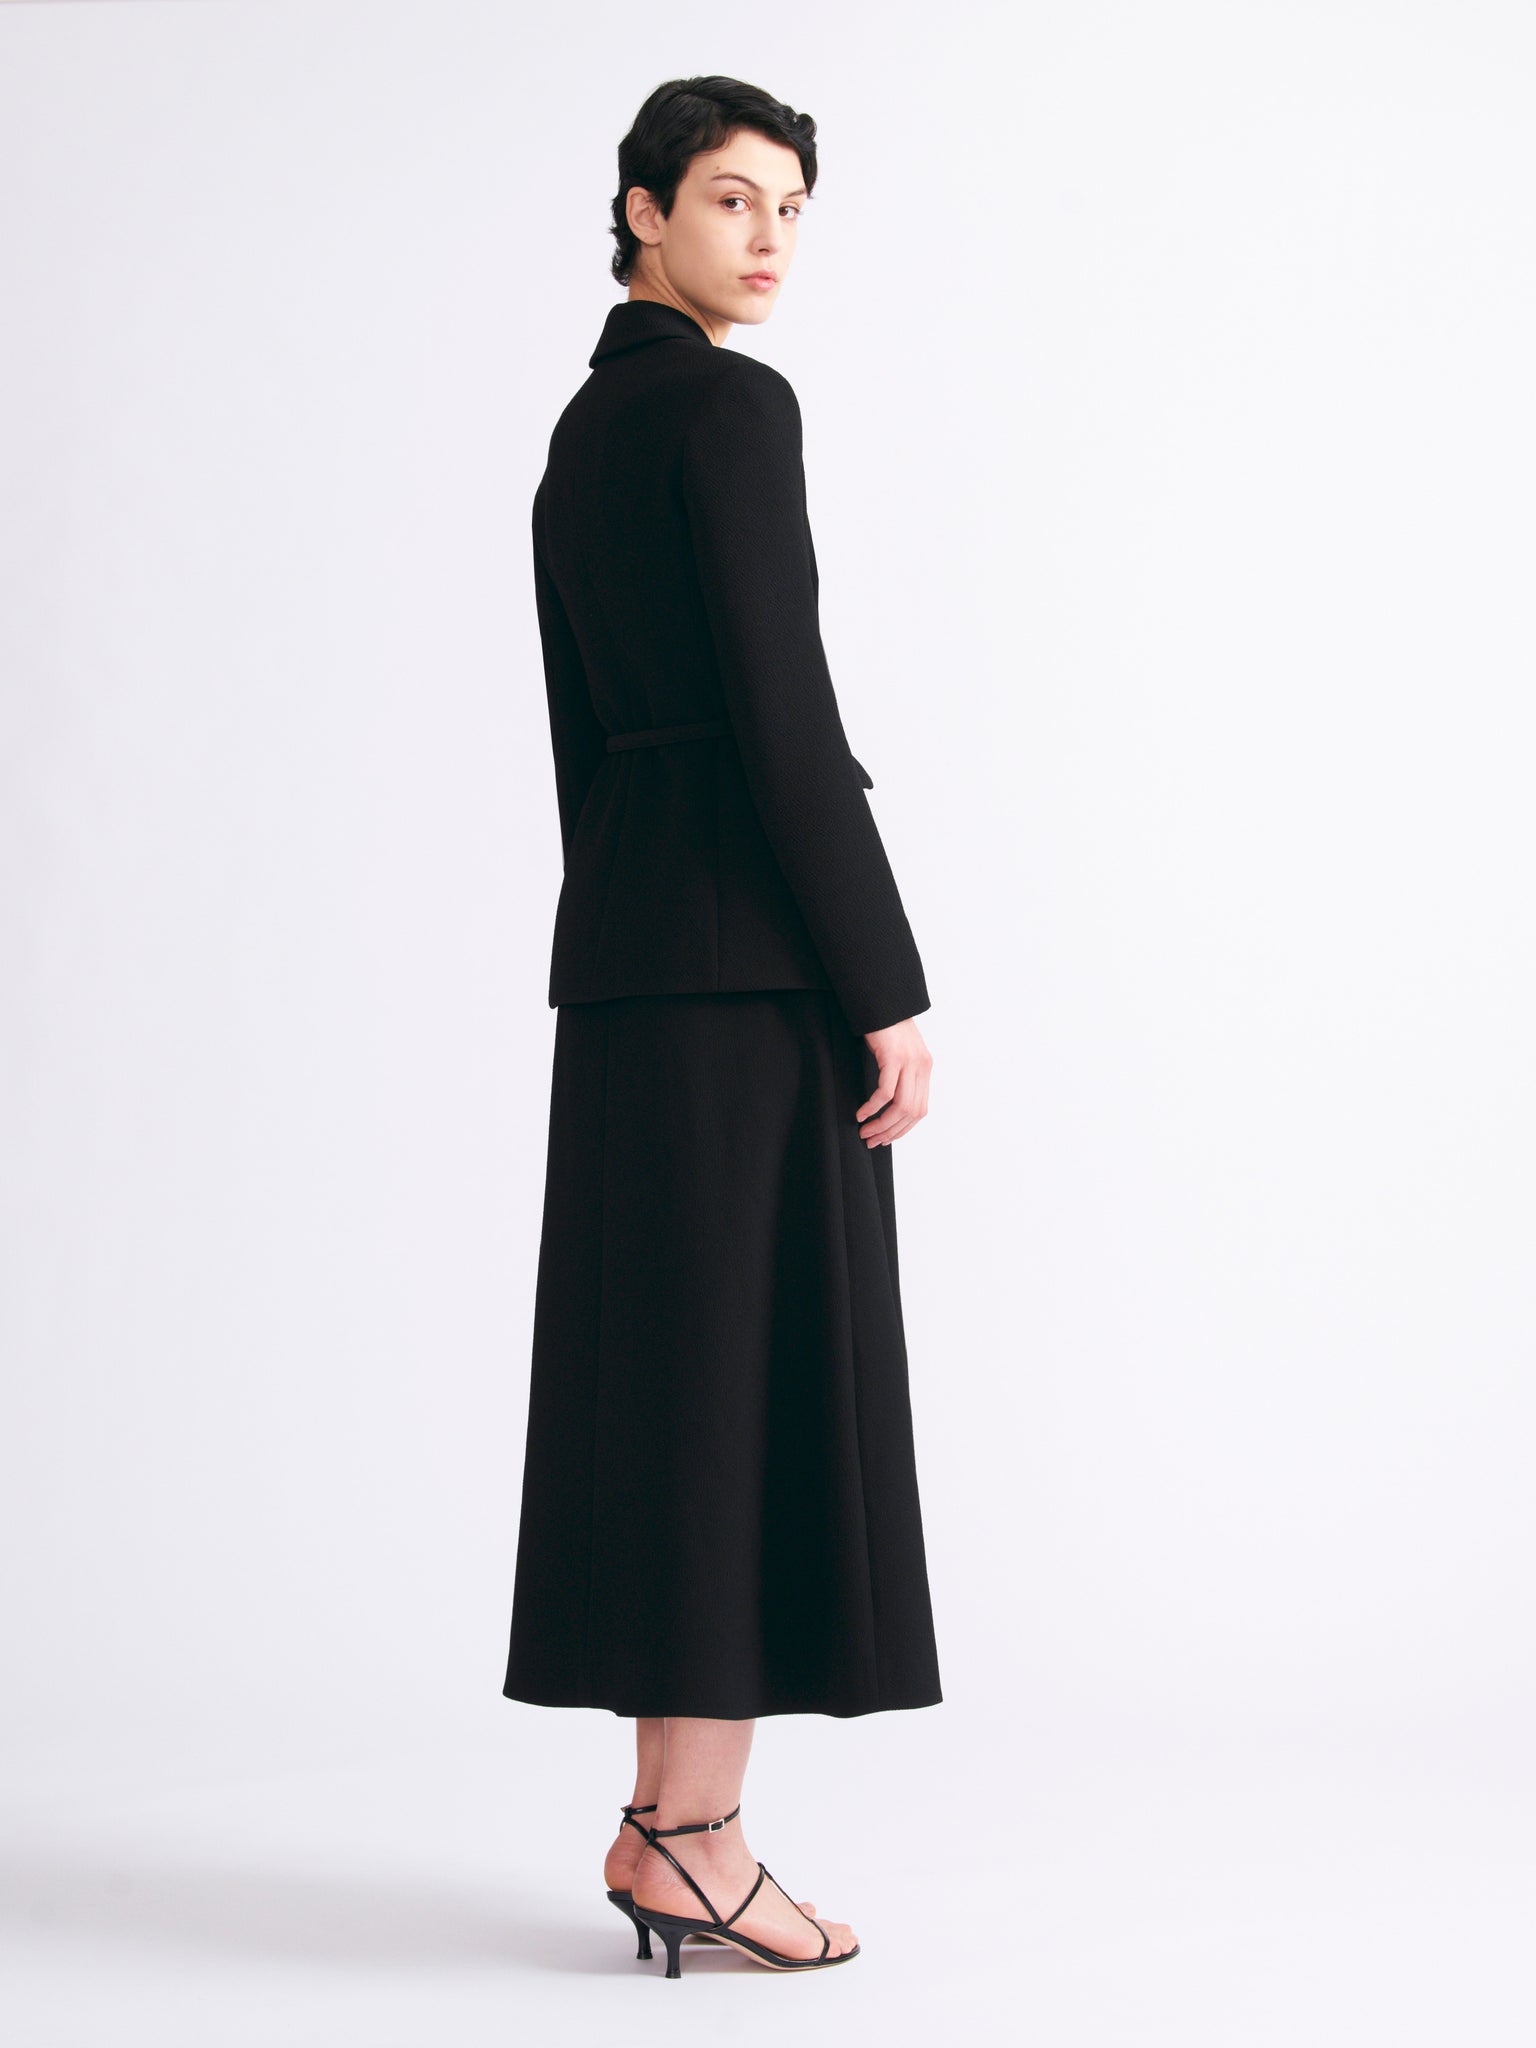 Sato Inverted Pleat A-Line Skirt In Black Double Crepe | Emilia Wickstead